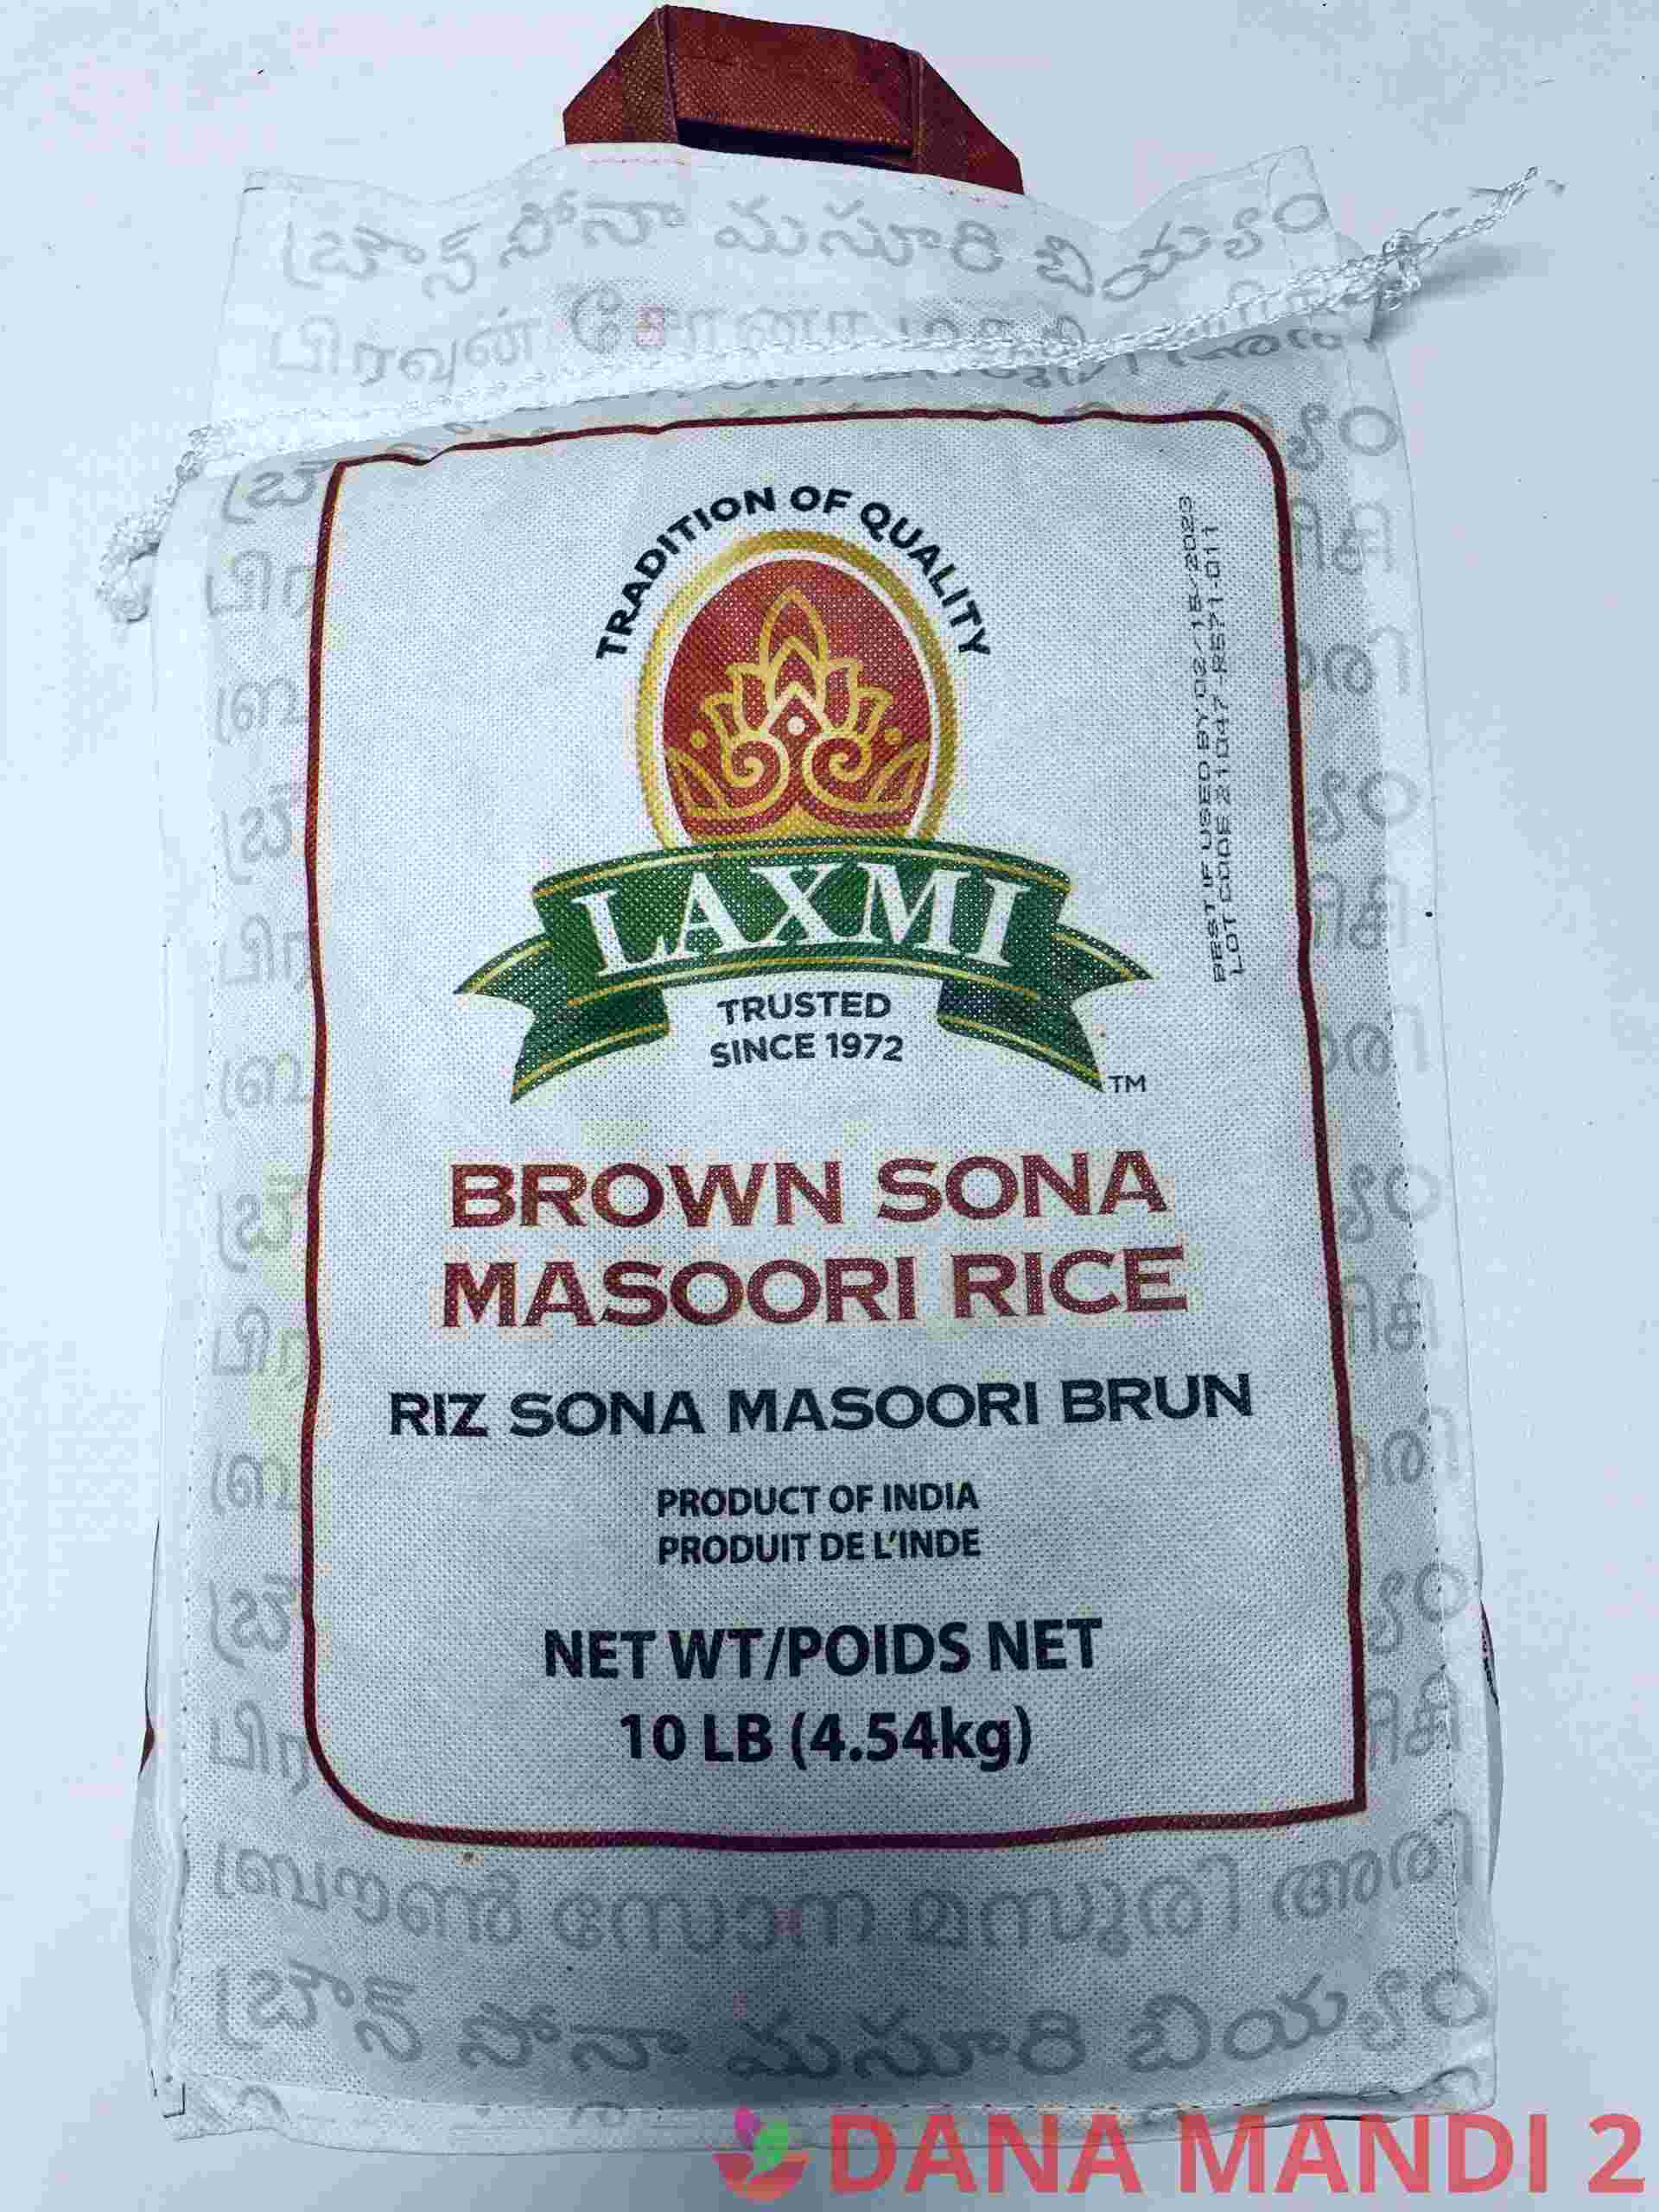 Laxmi Brown Sona Masoori Rice